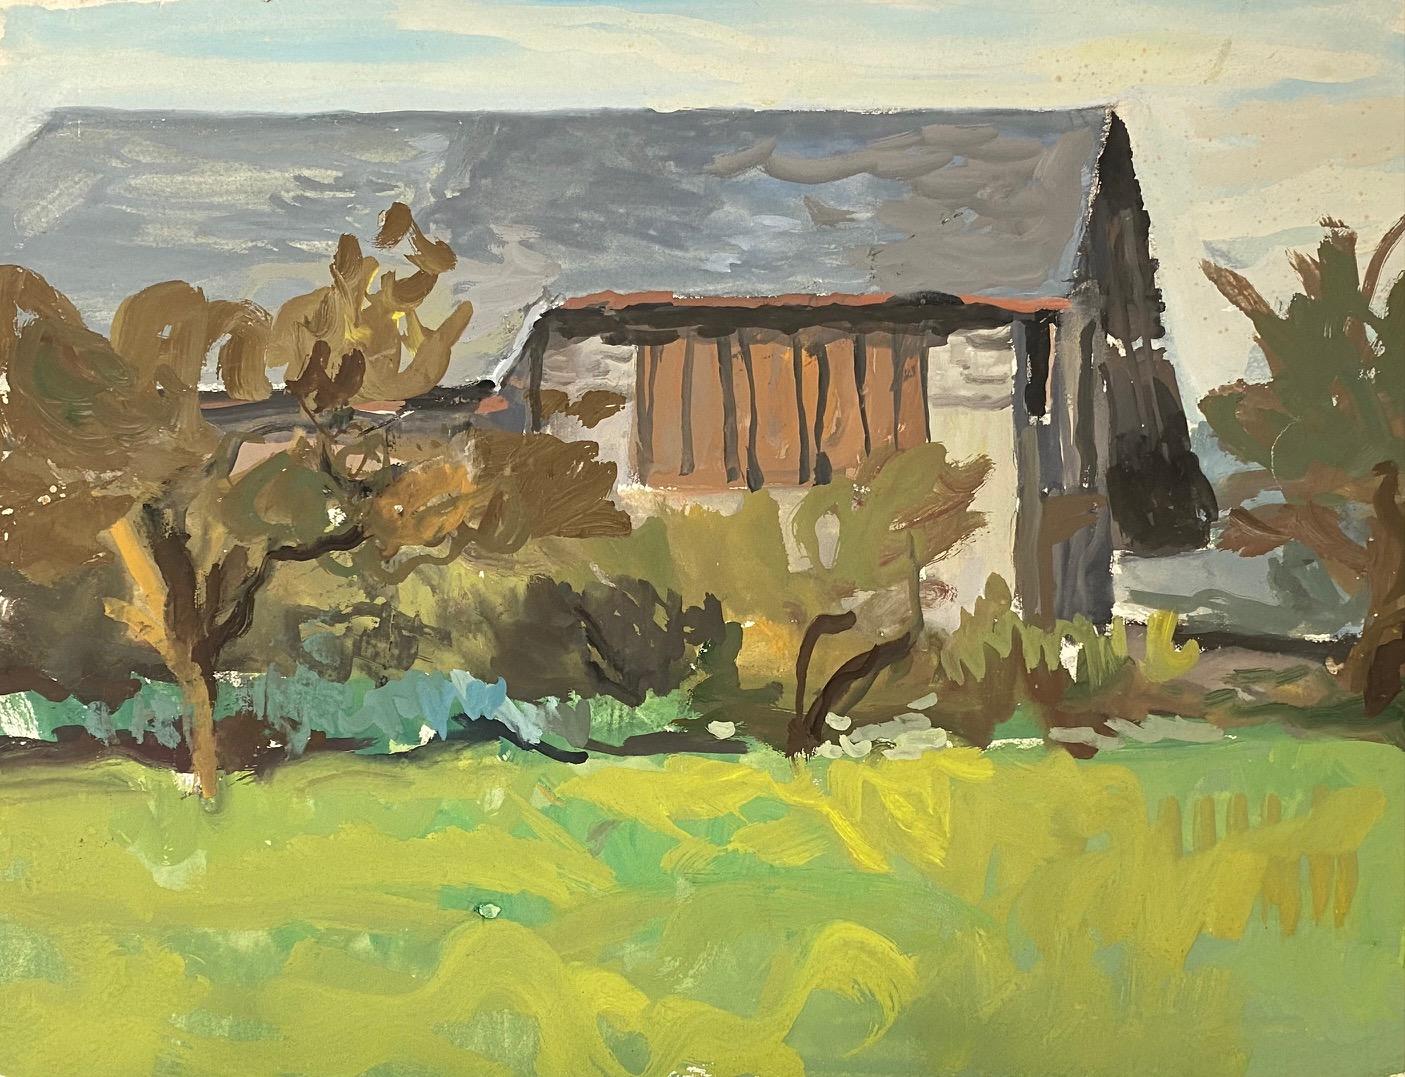 Farm view by Charles Goetz - Watercolor 27x34 cm